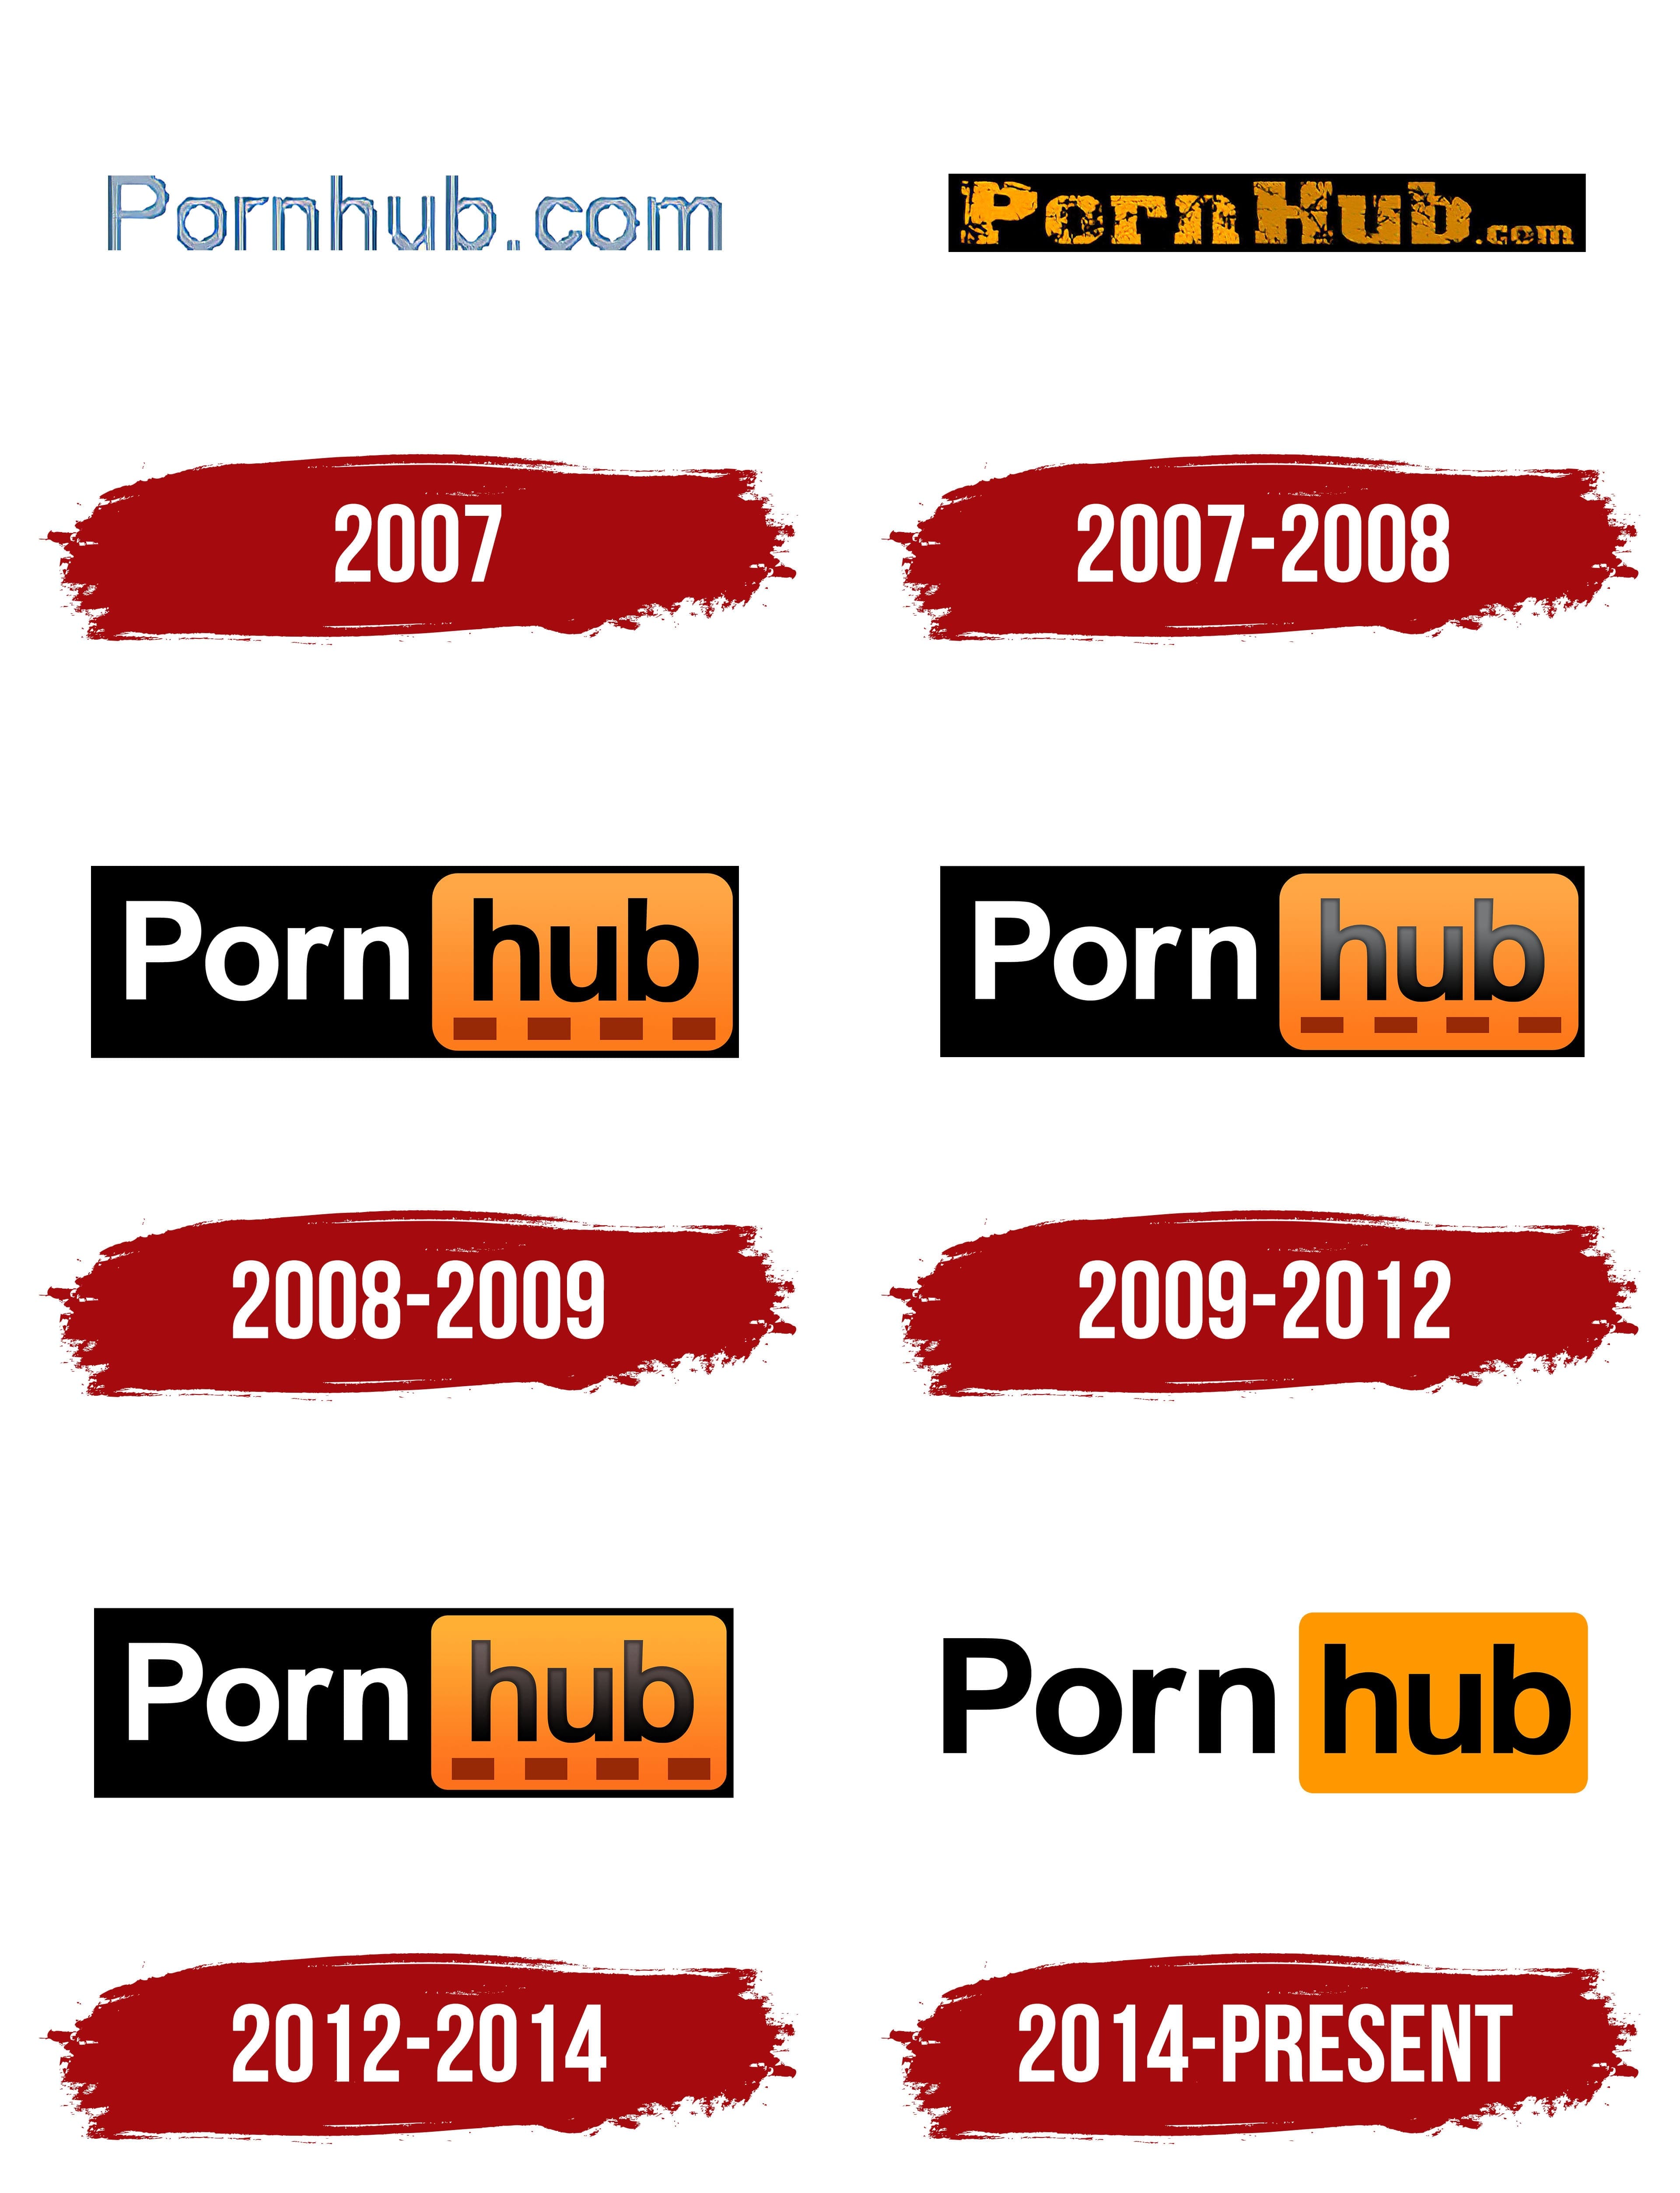 Porno hub.com in San Francisco